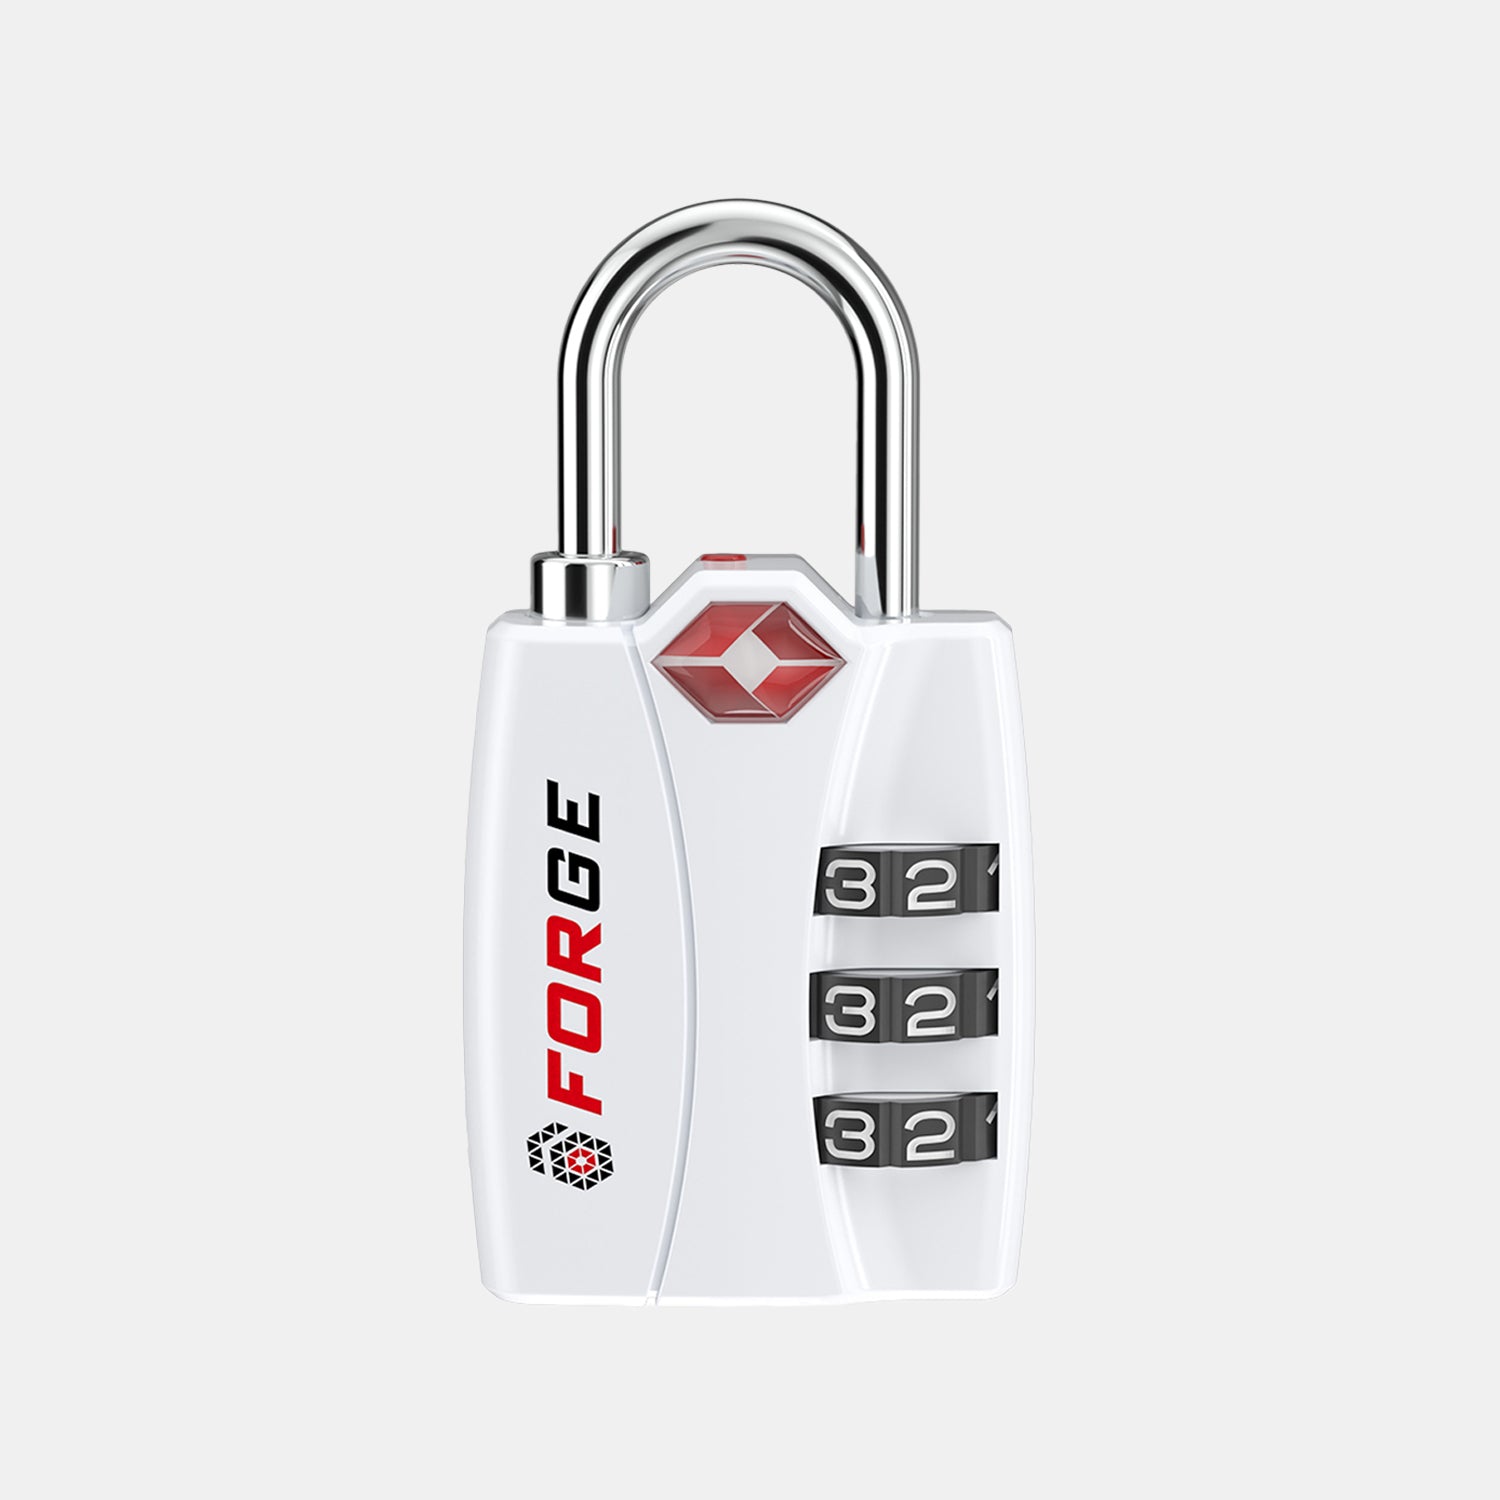 TSA-Approved Luggage Locks: 3-Digit Combination, Open Alert Indicator, White 2 Locks